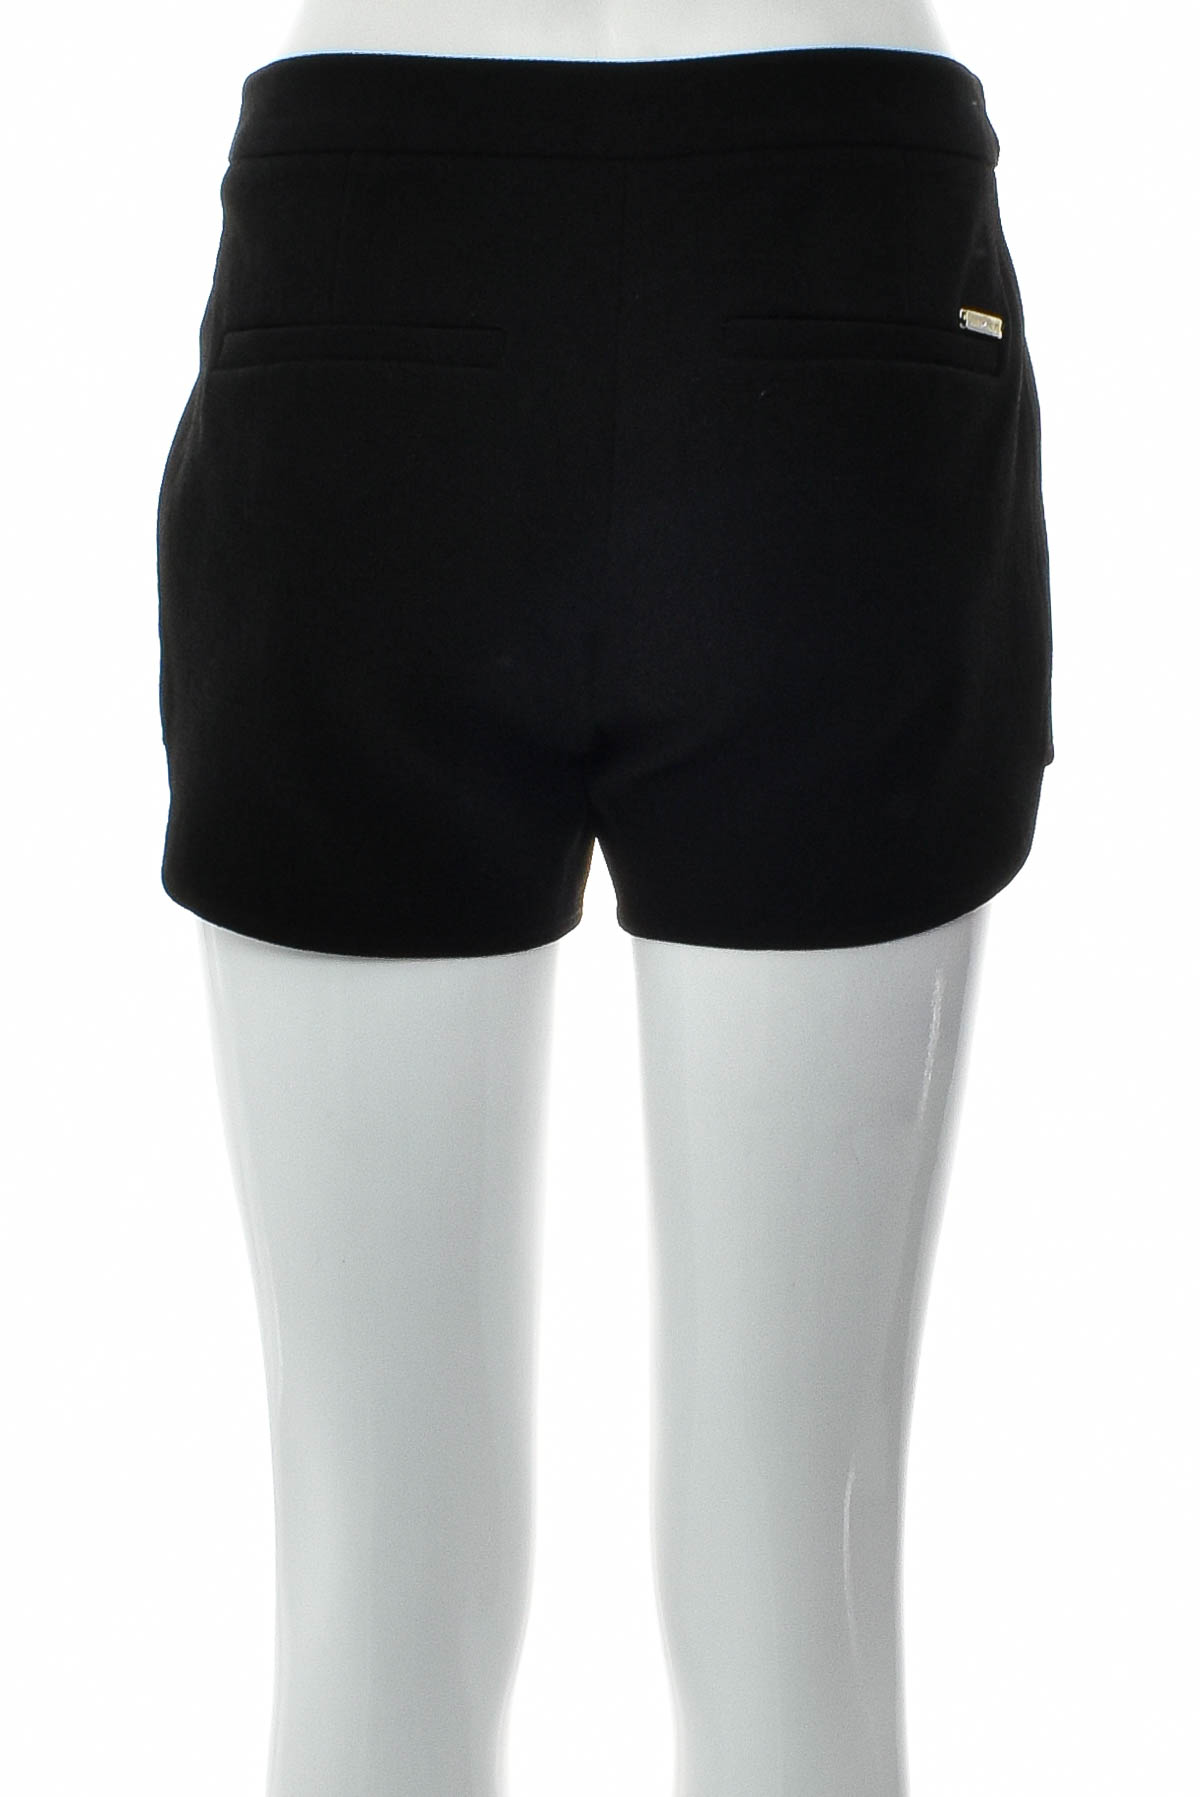 Female shorts - Sora by jbc - 1